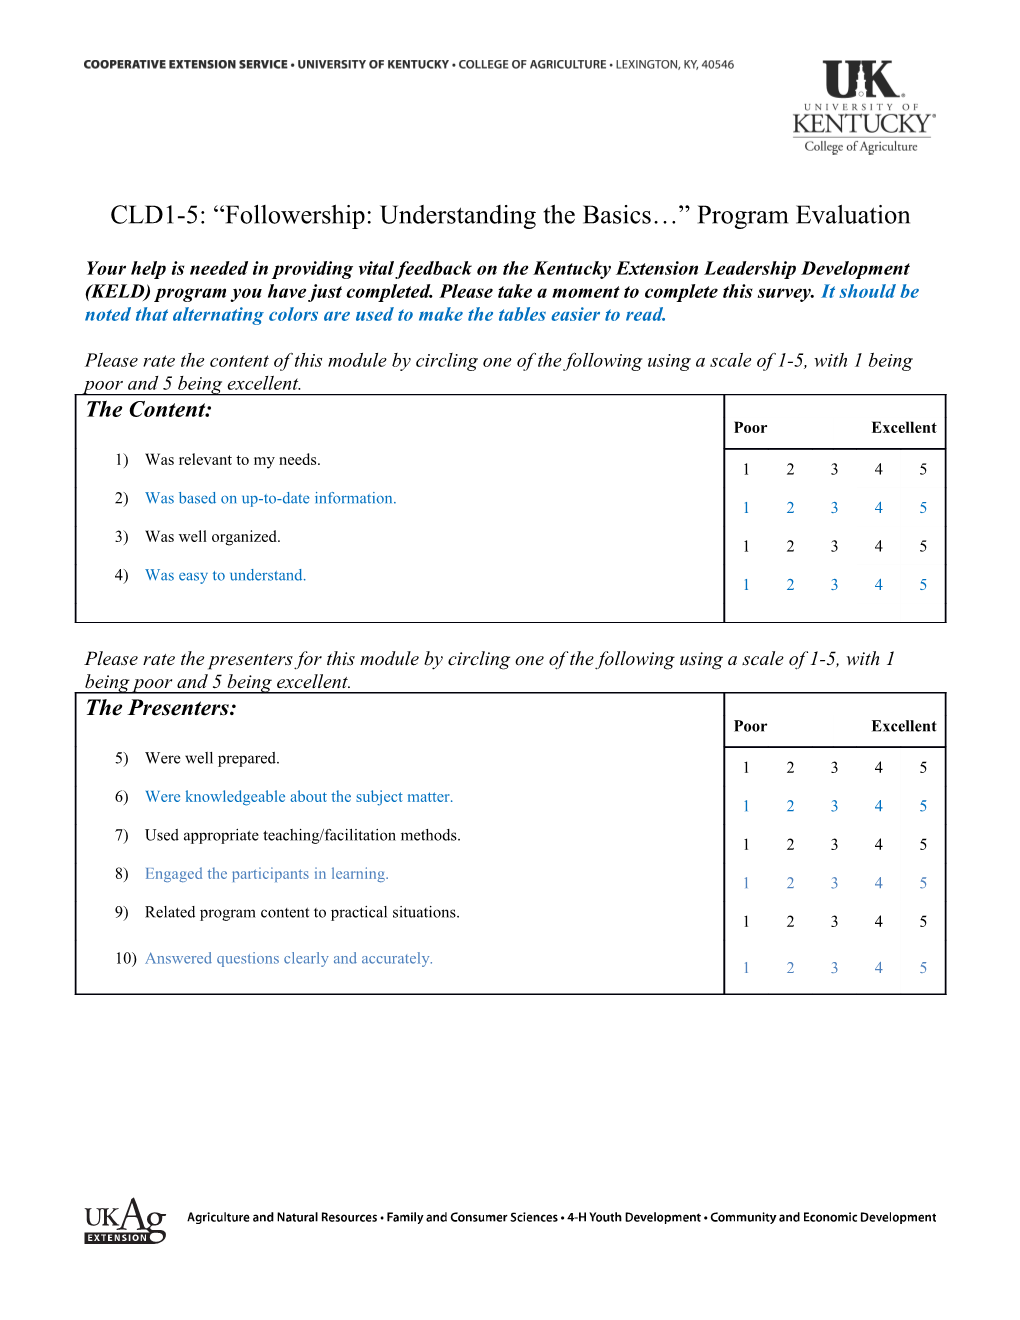 CLD1-5: Followership: Understanding the Basics Program Evaluation